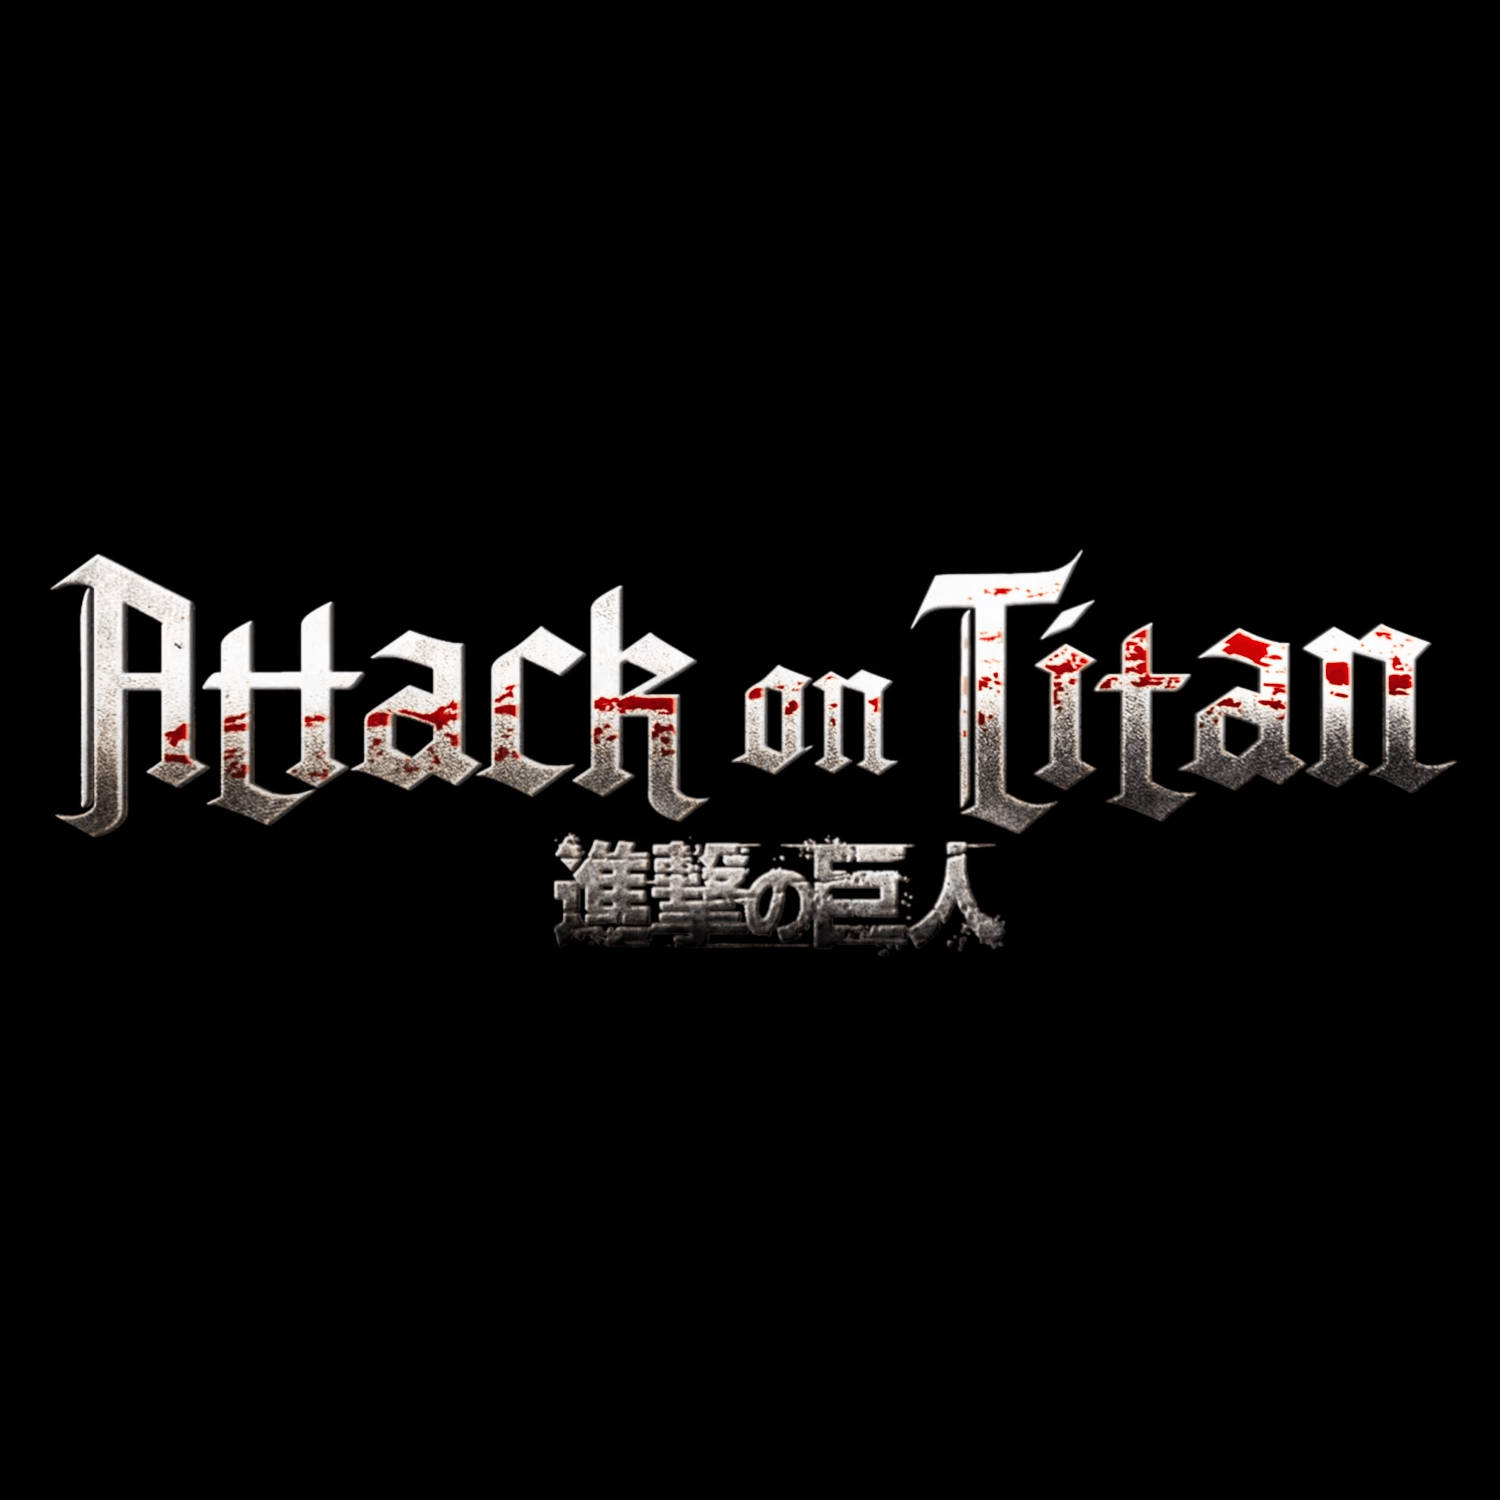 Black Attack On Titan Logo Background